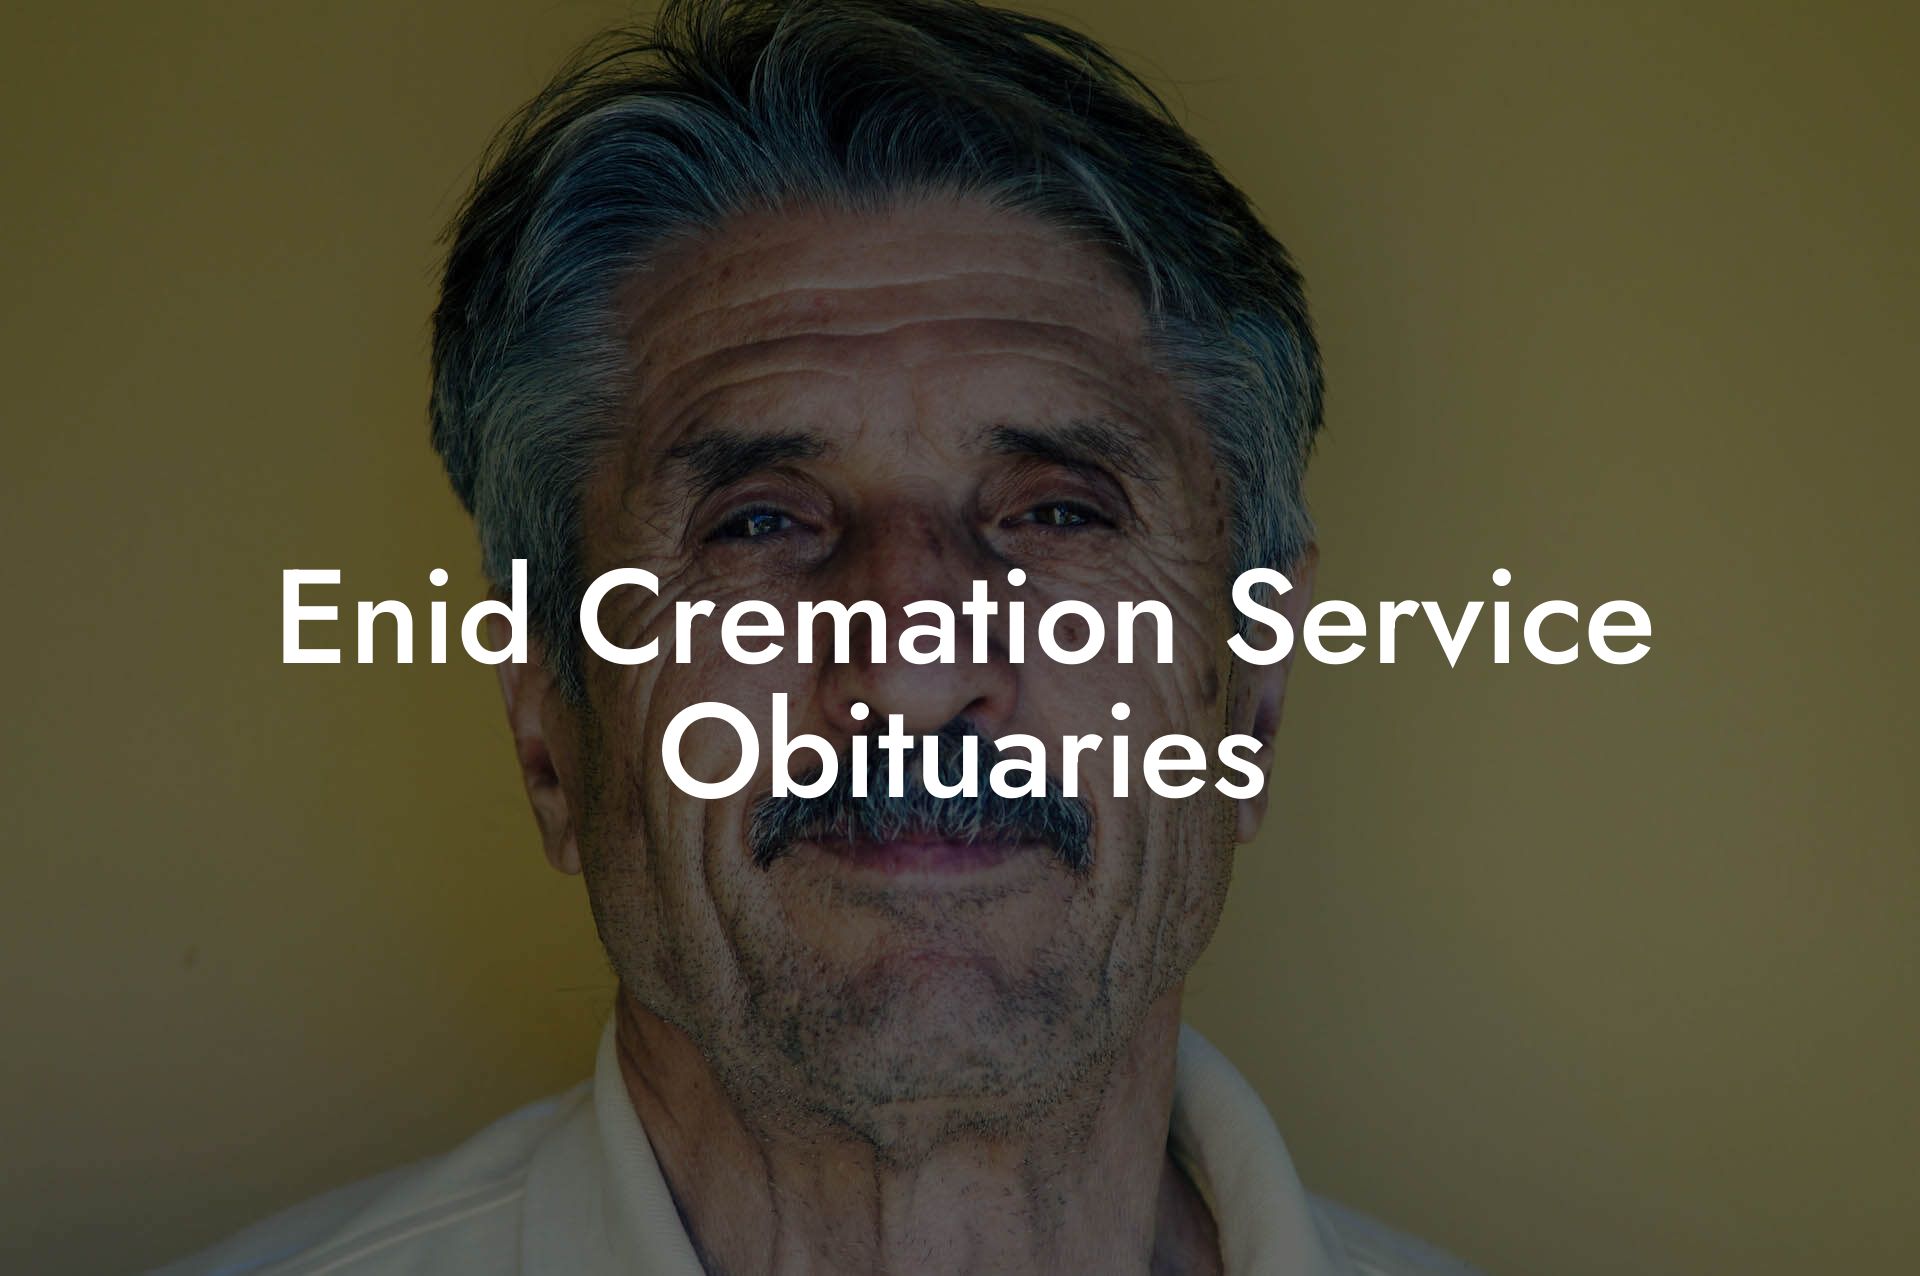 Enid Cremation Service Obituaries